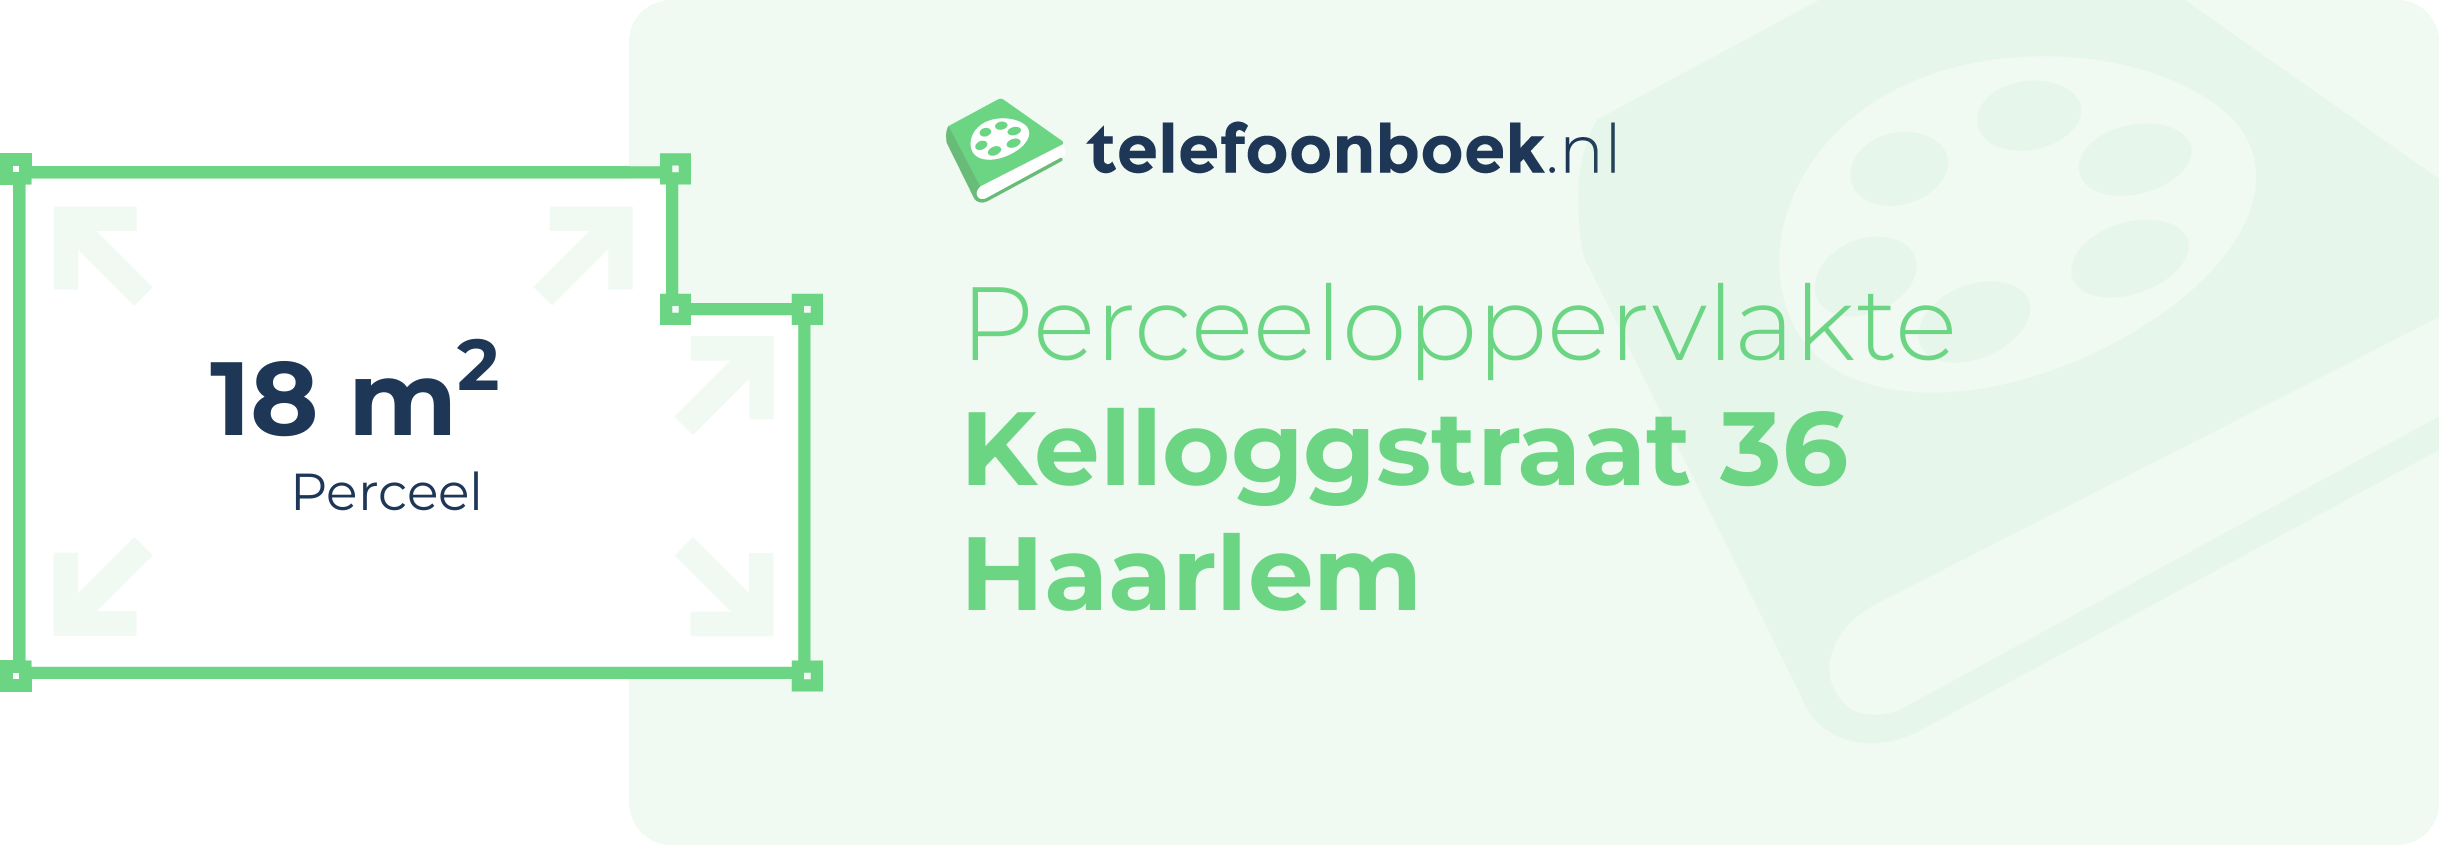 Perceeloppervlakte Kelloggstraat 36 Haarlem